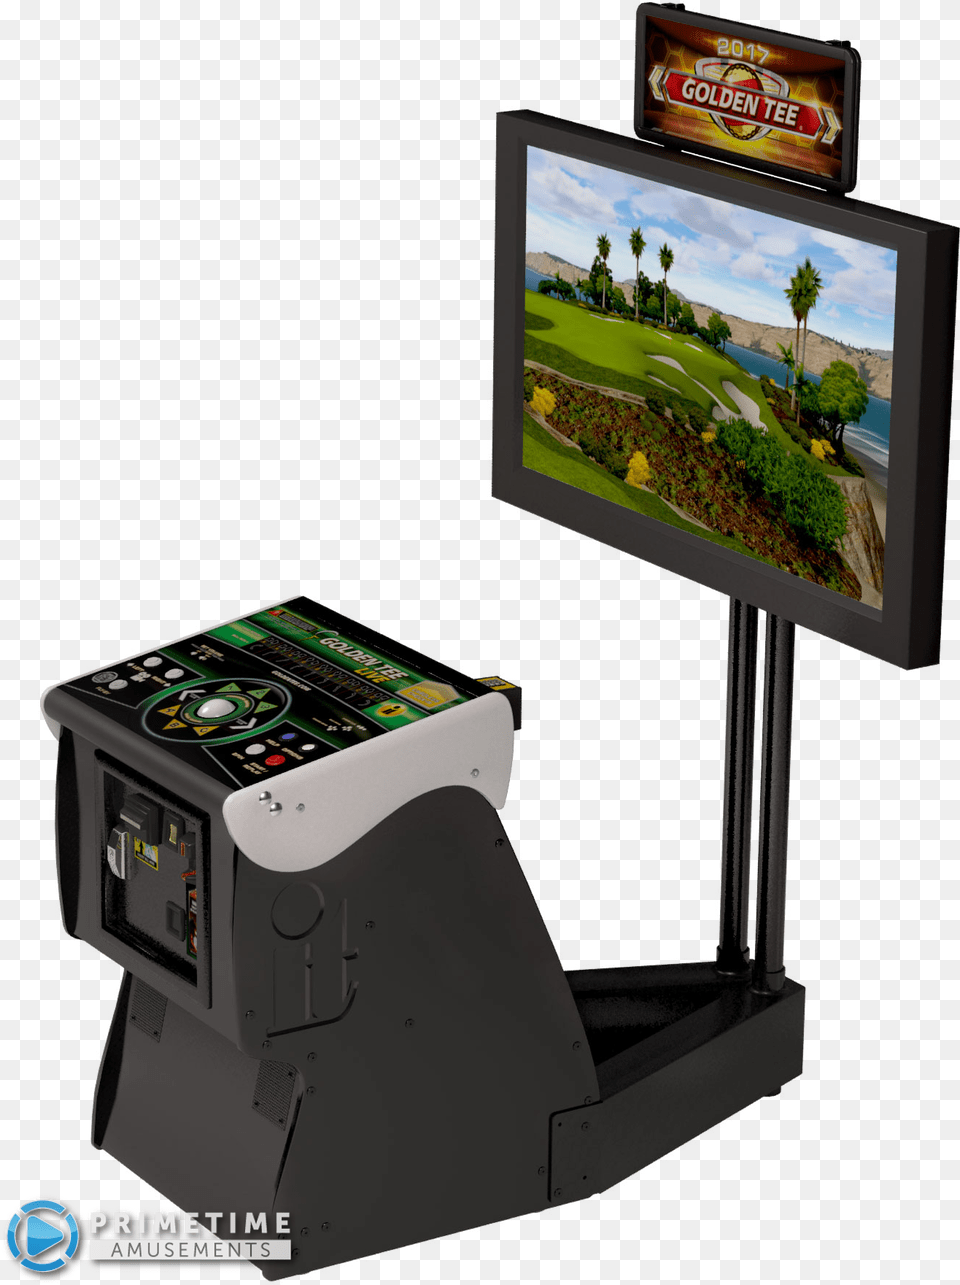 Golden Tee 2017 Live Arcade Game Flat Panel Display, Computer Hardware, Electronics, Hardware, Monitor Png Image